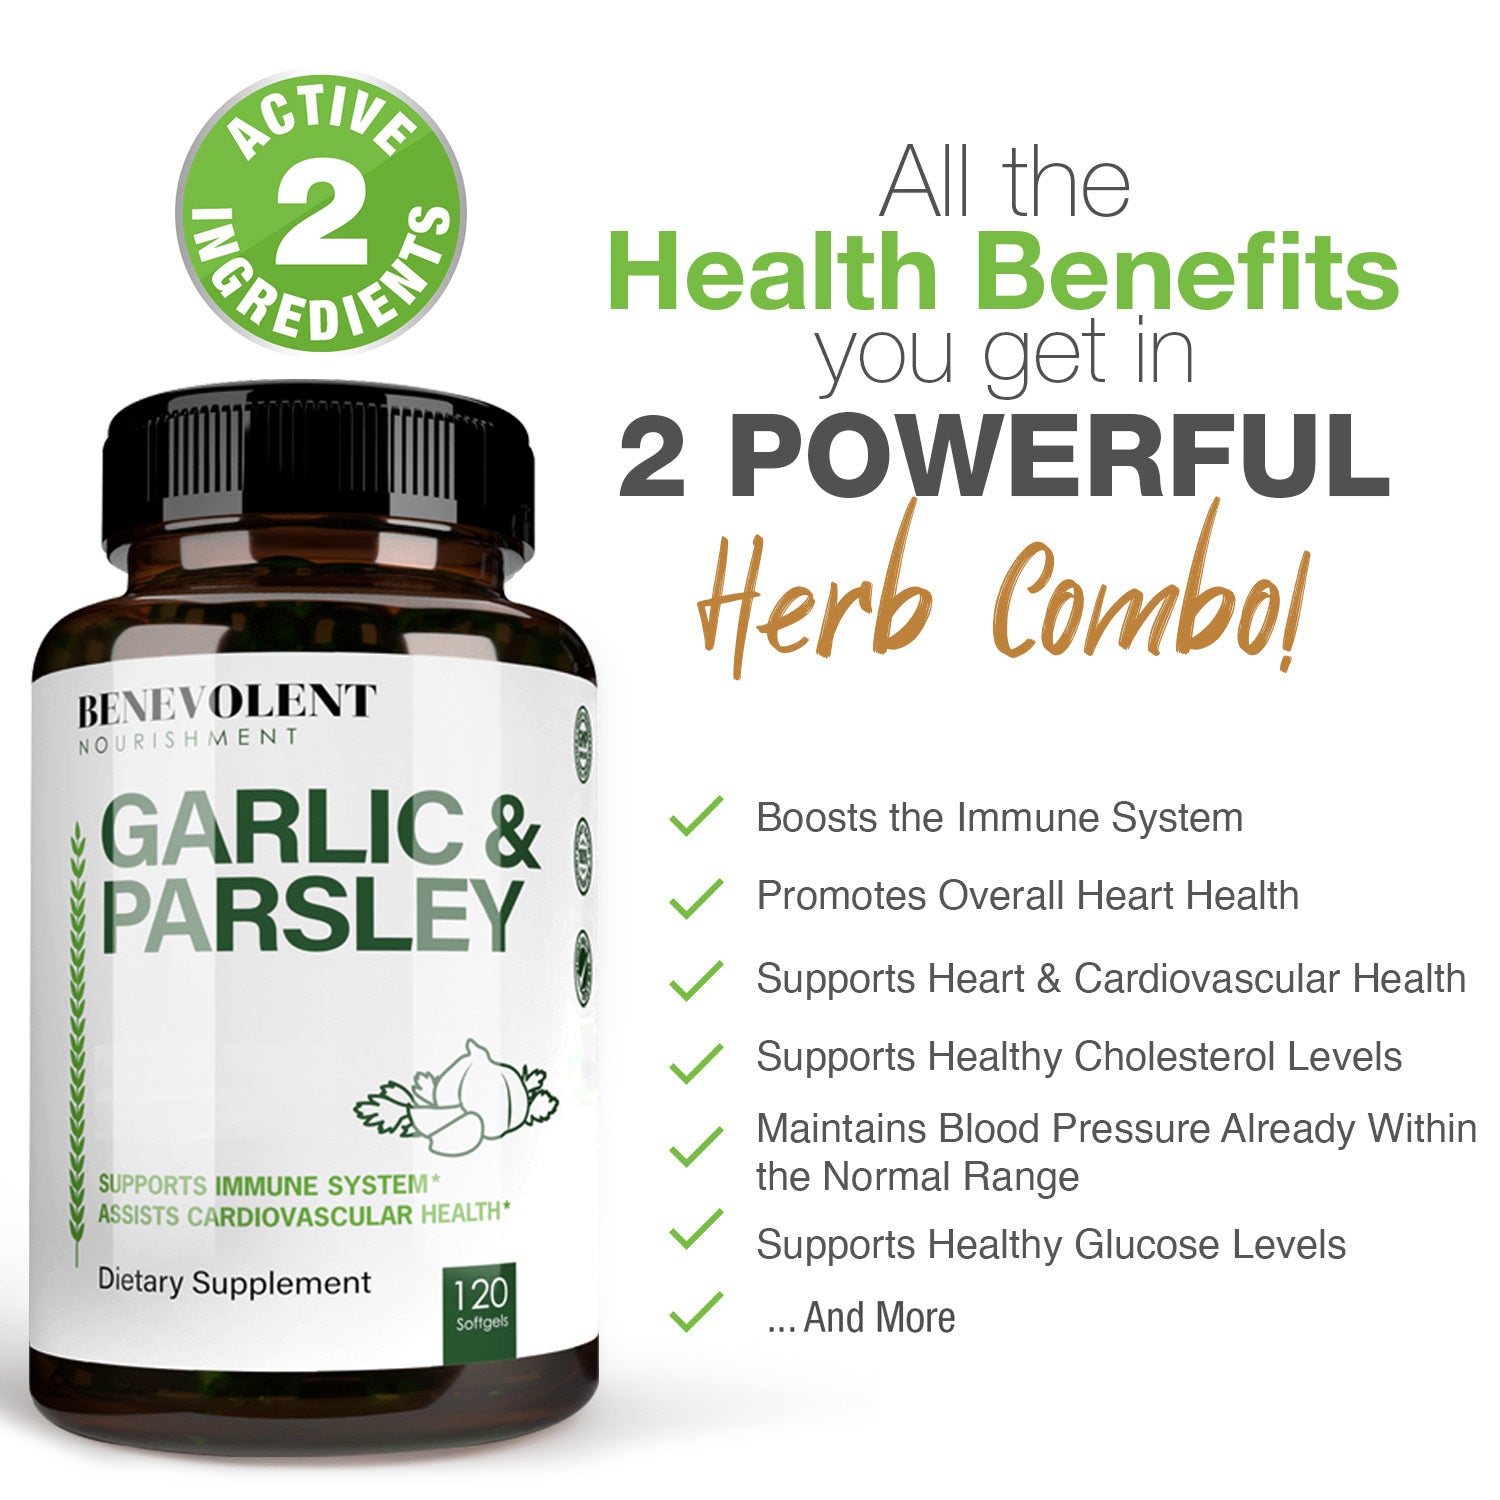 Garlic & Parsley advantages